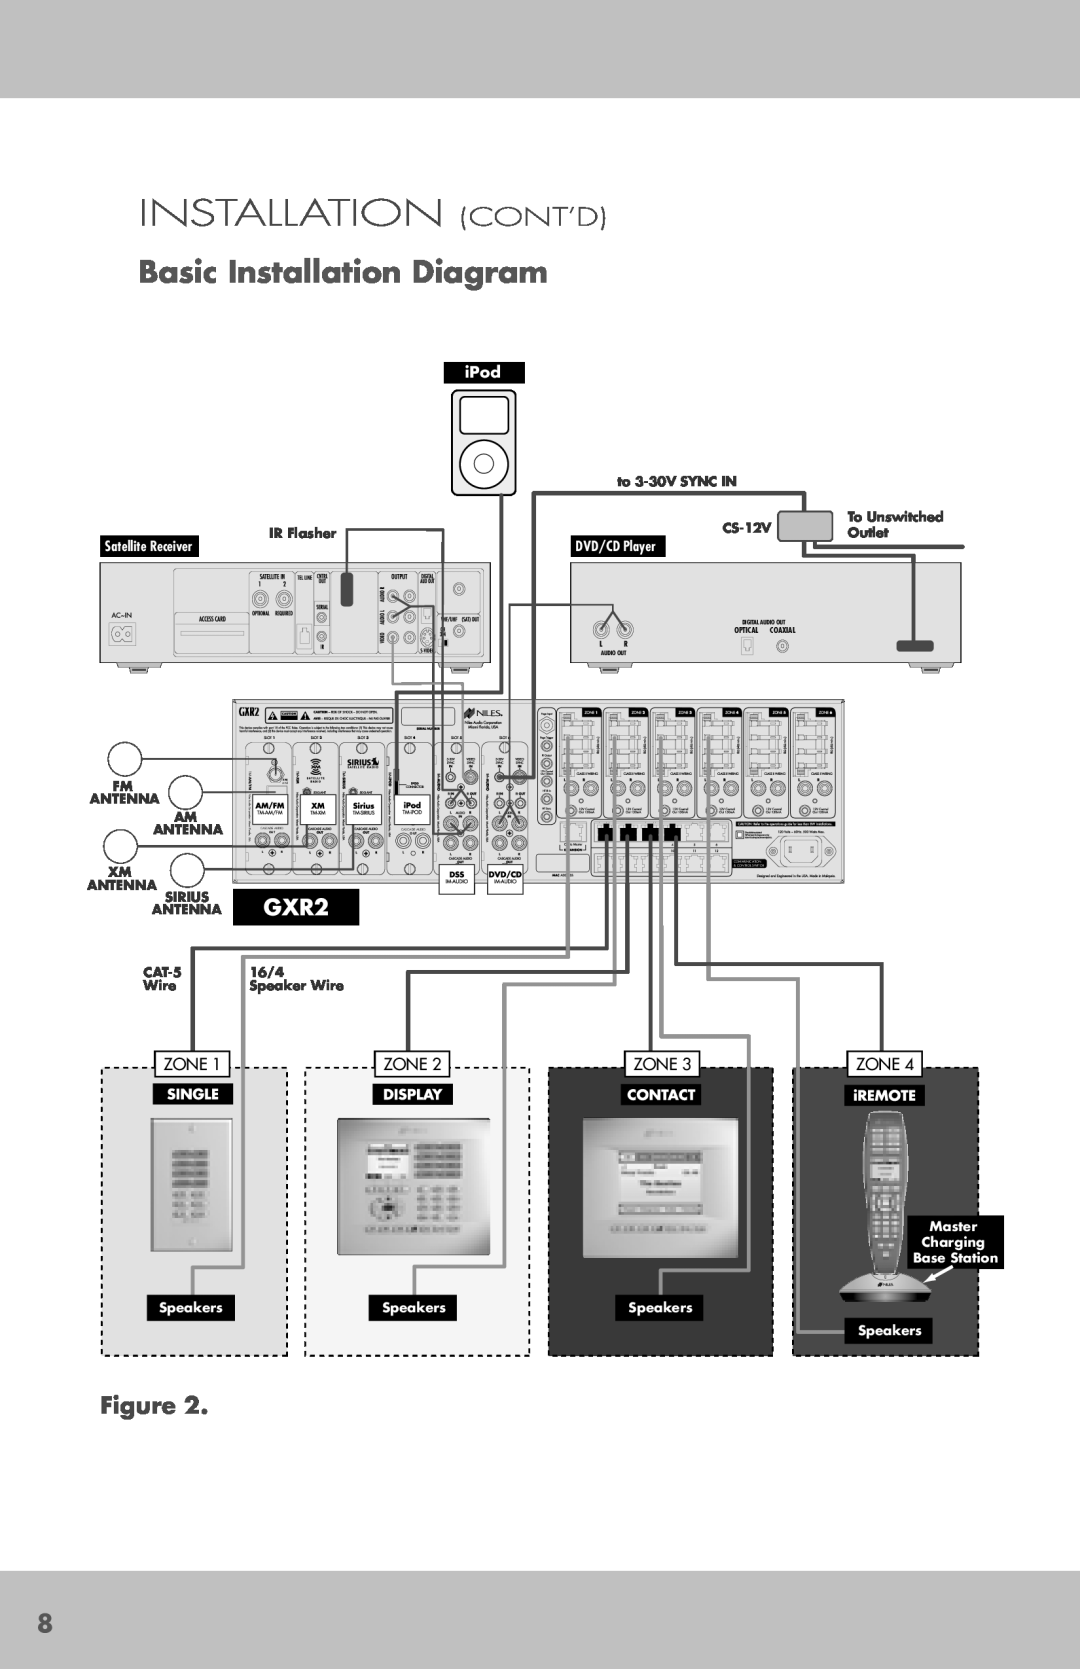 Niles Audio GXR2 manual Basic Installation Diagram, Installation Cont’D 